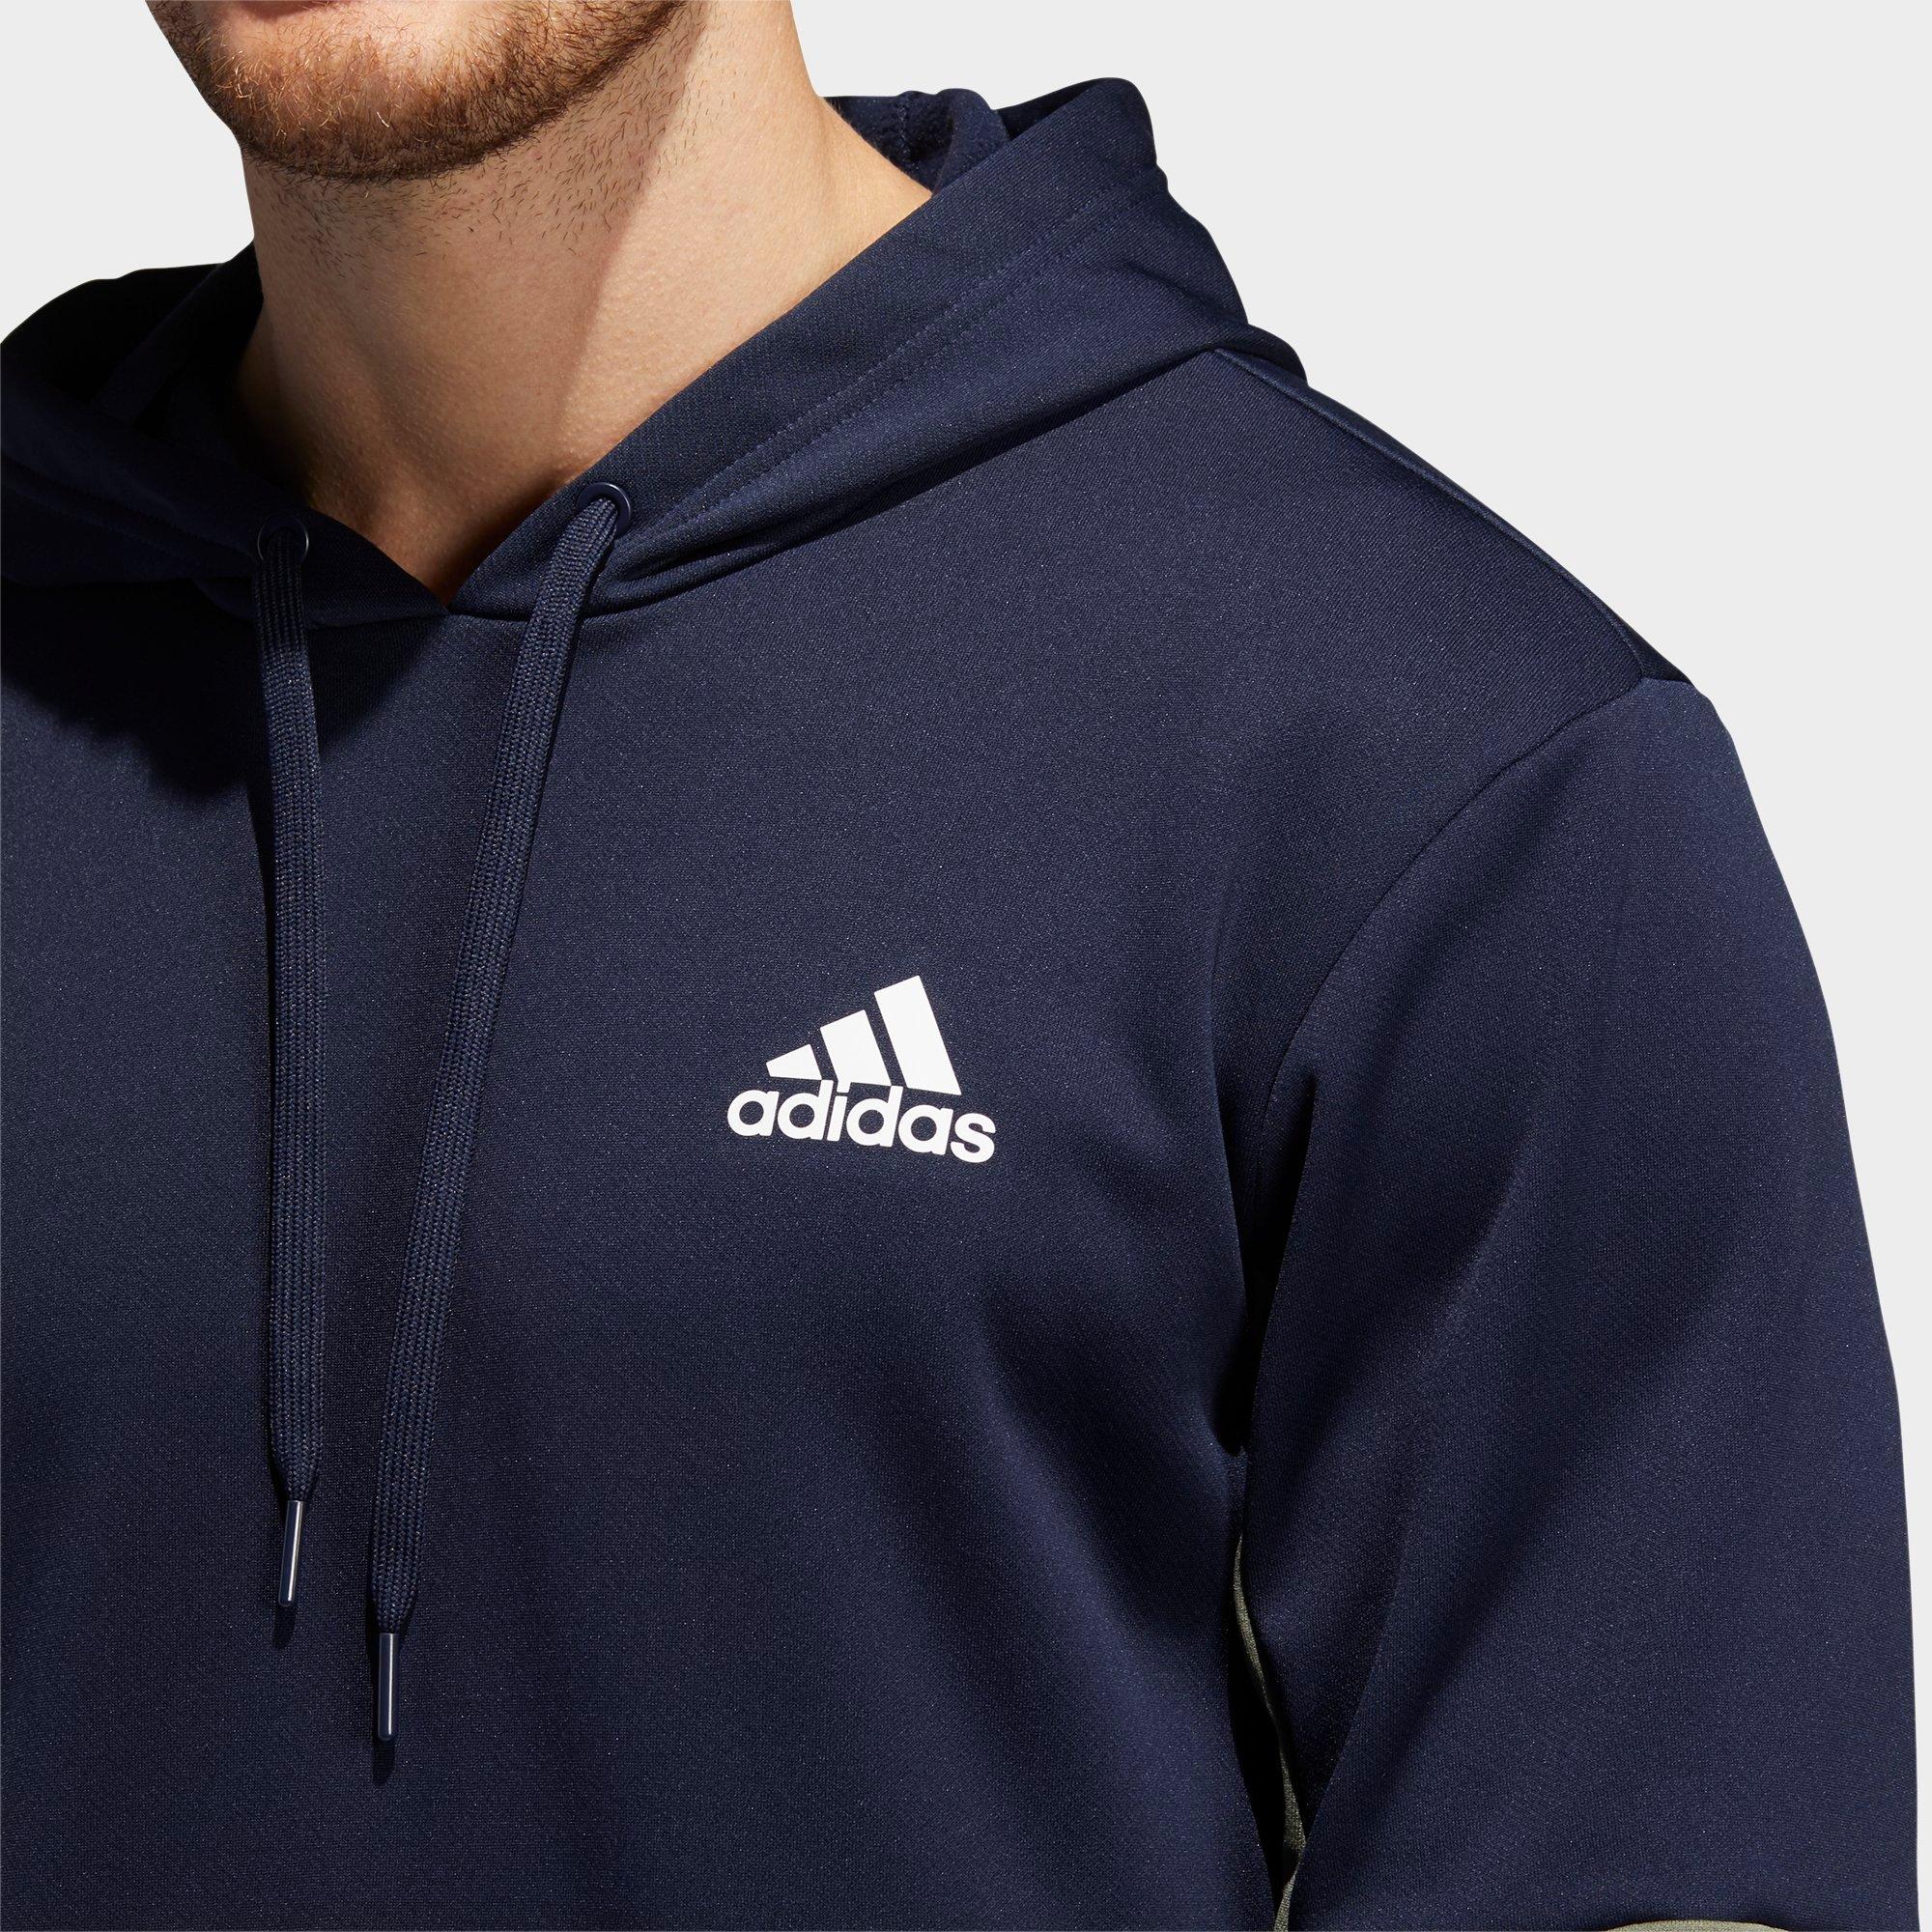 adidas team issue hoodie men's